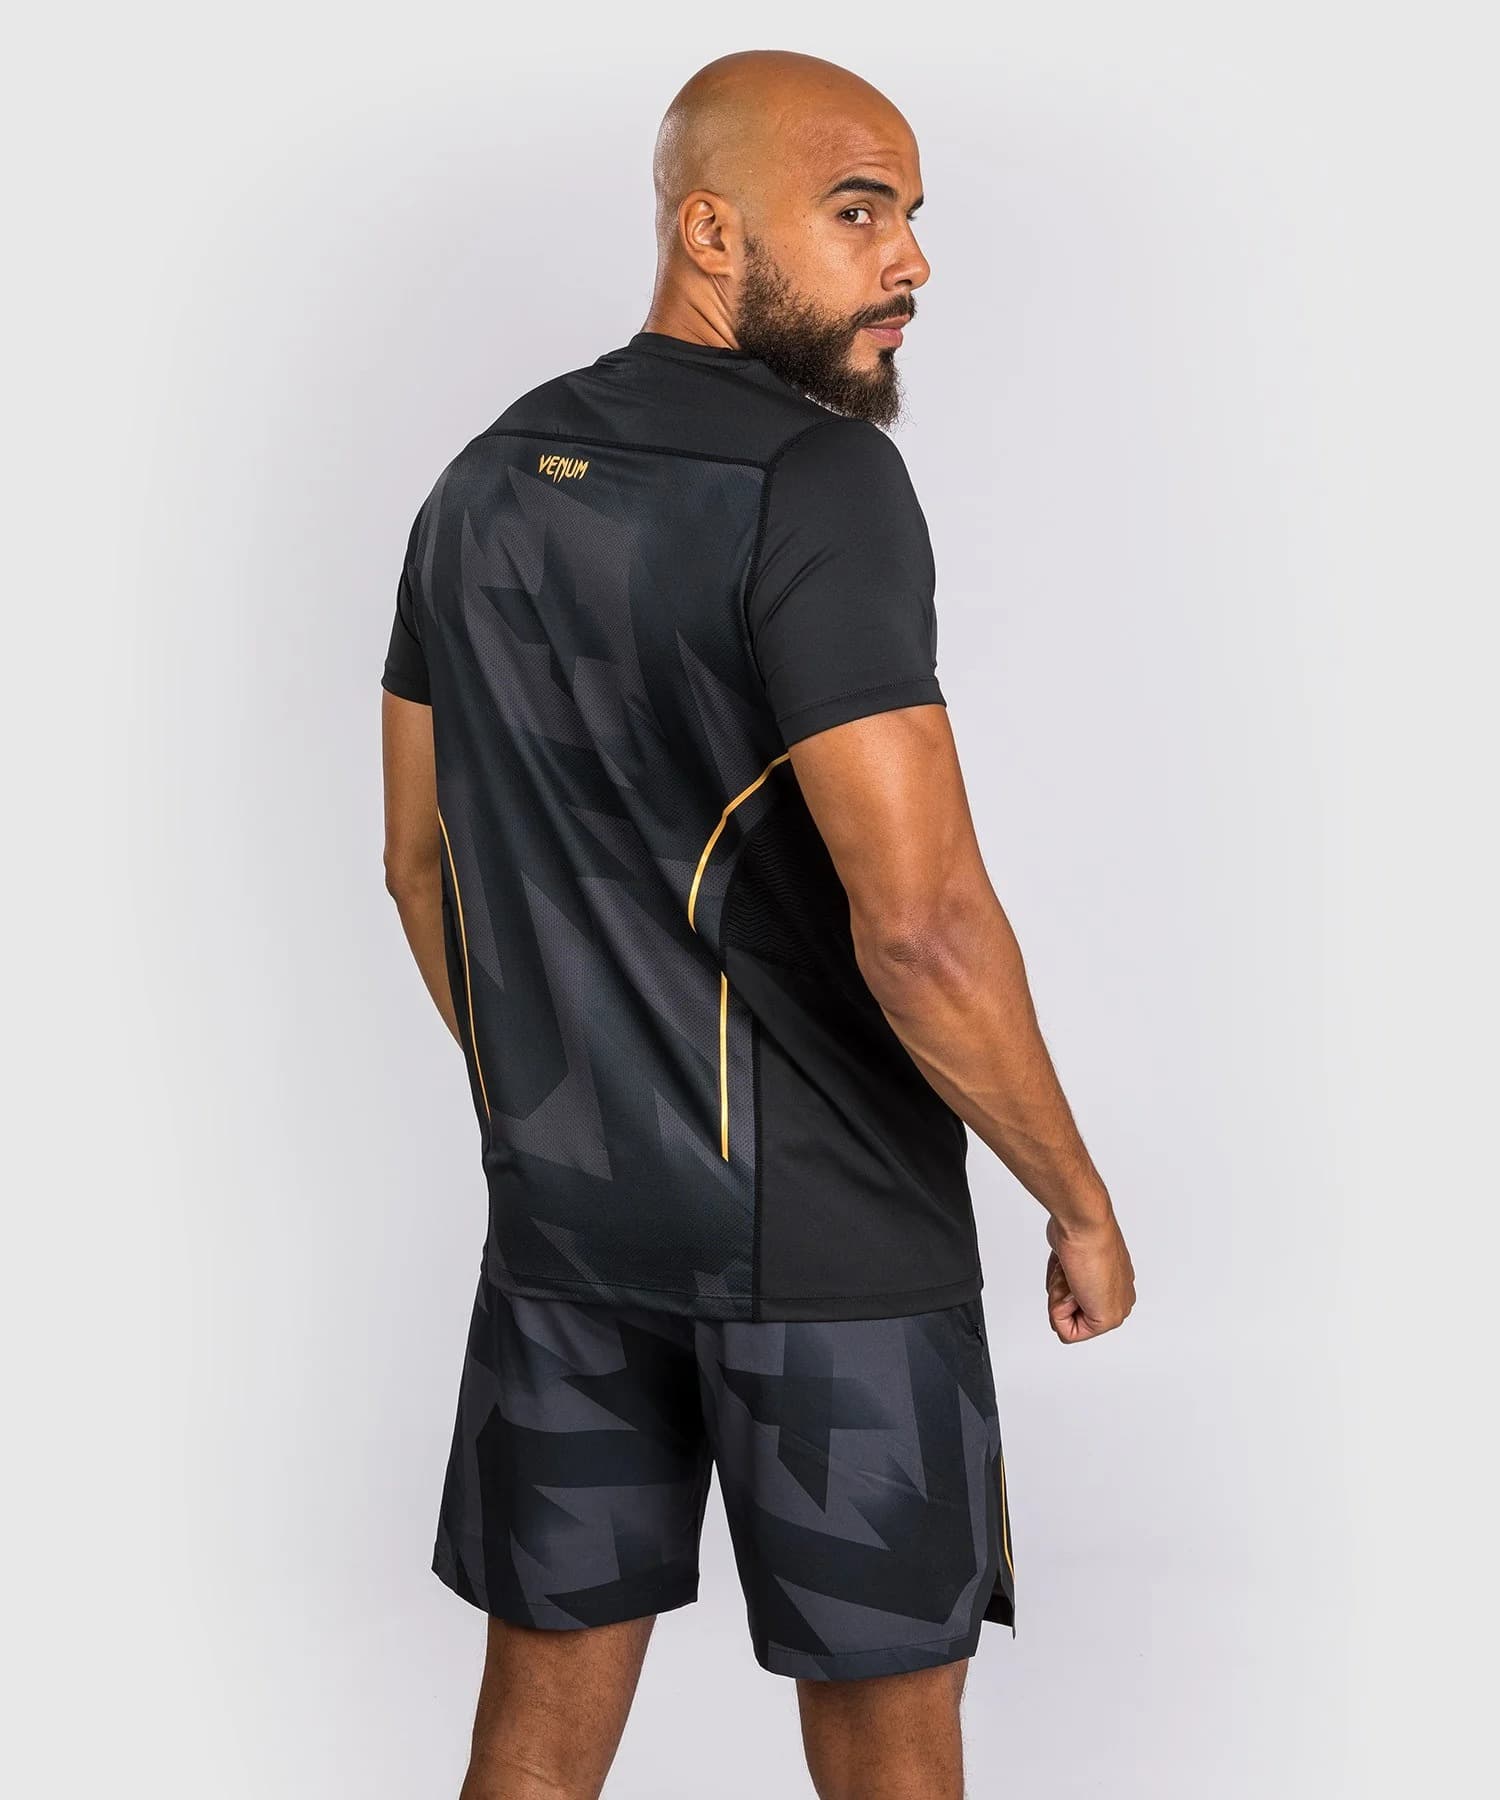 Venum Razor Dry Tech short sleeve t-shirt black / gold > Free Shipping